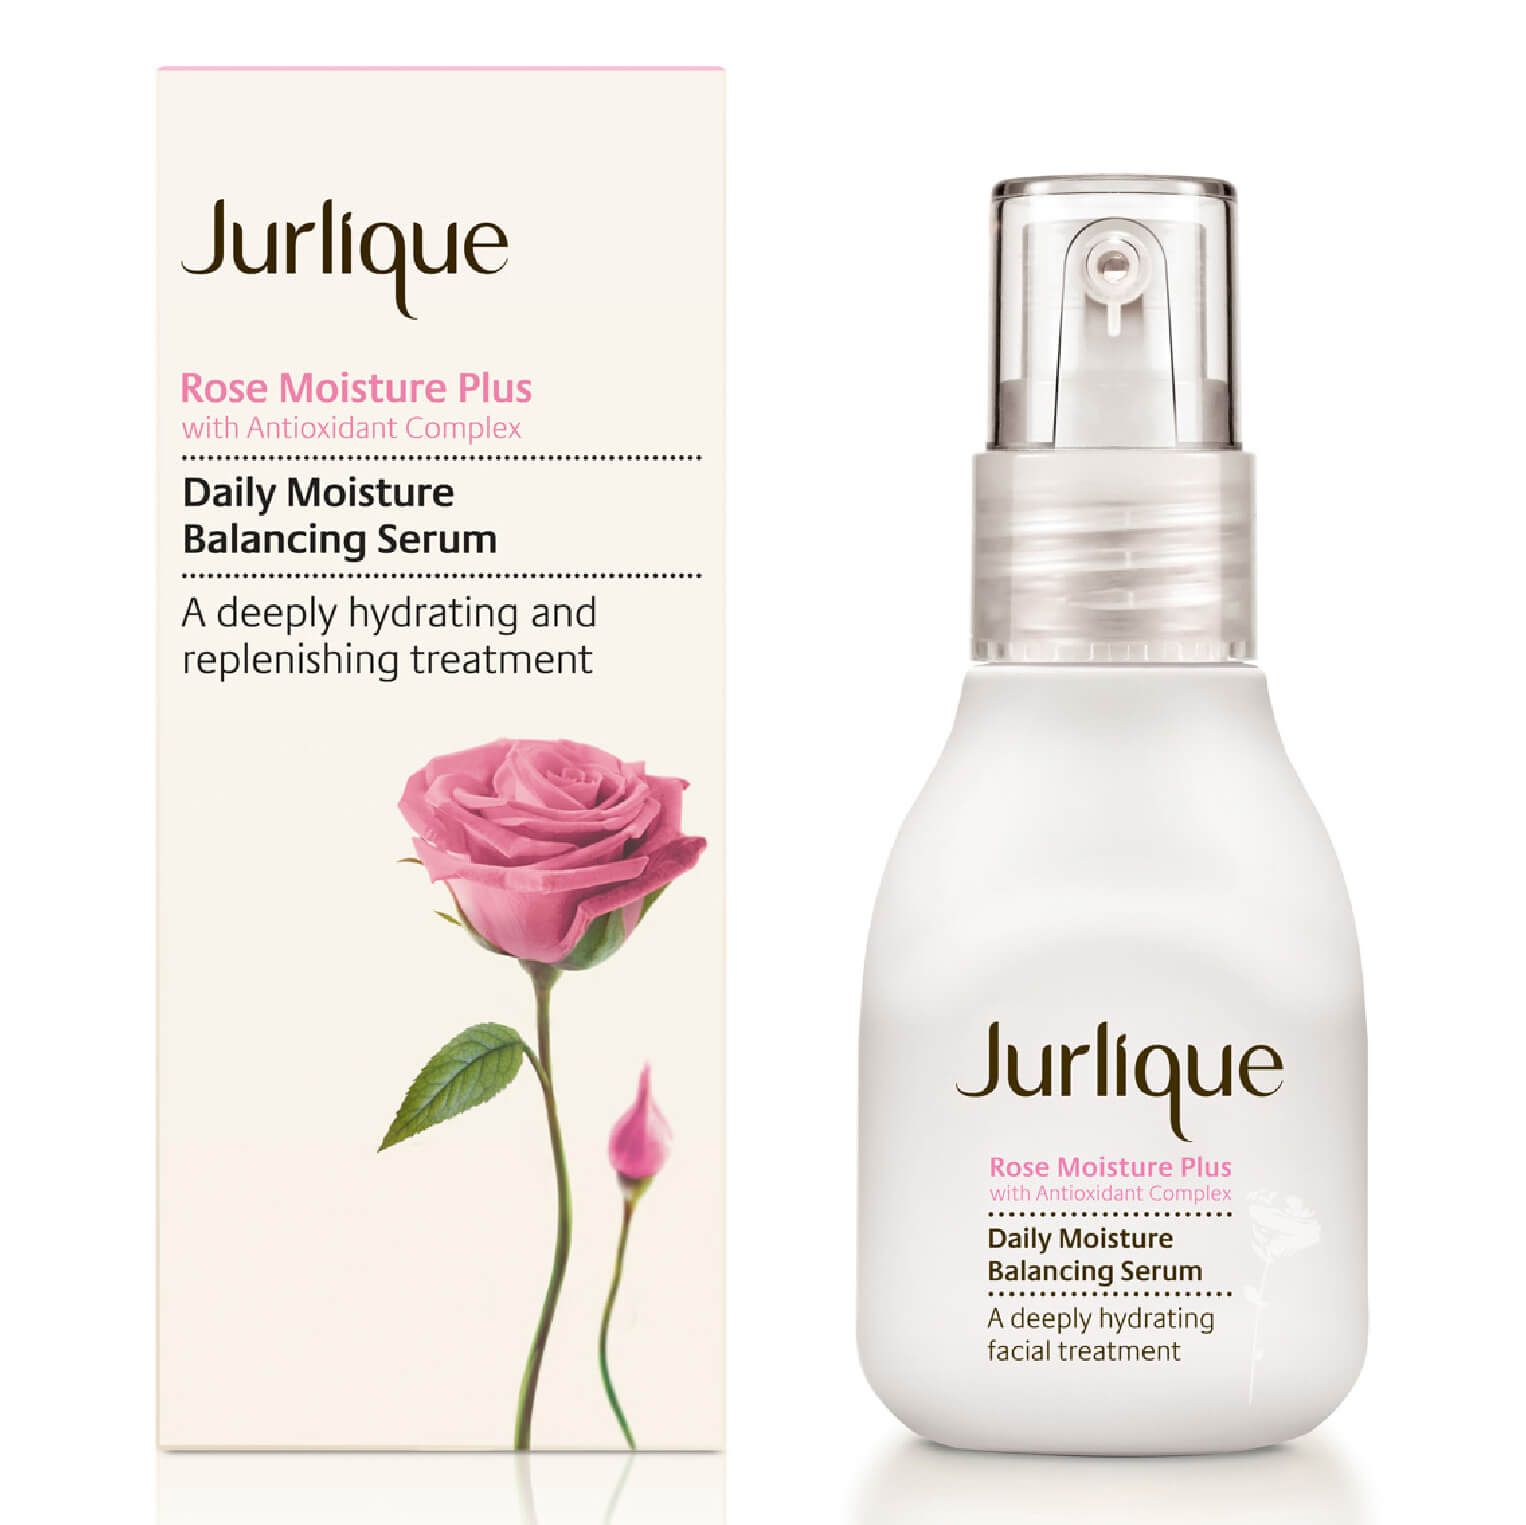 Jurlique Rose Moisture Plus Daily Moisture Balancing Serum